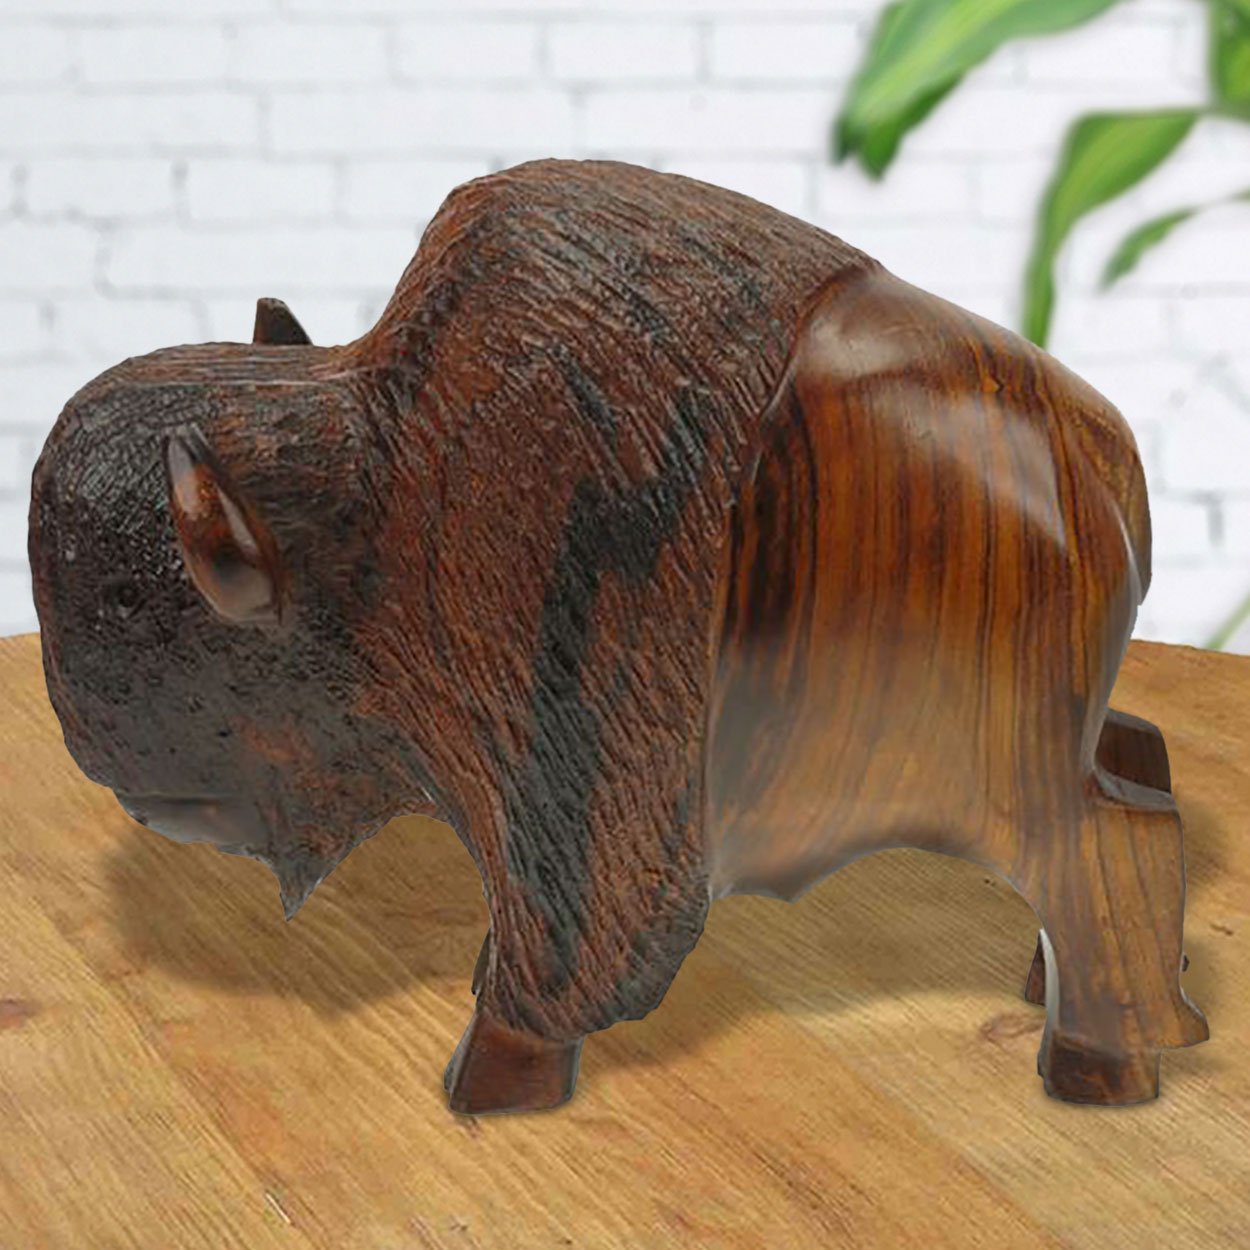 172118 - 8in Long Buffalo Ironwood Carving